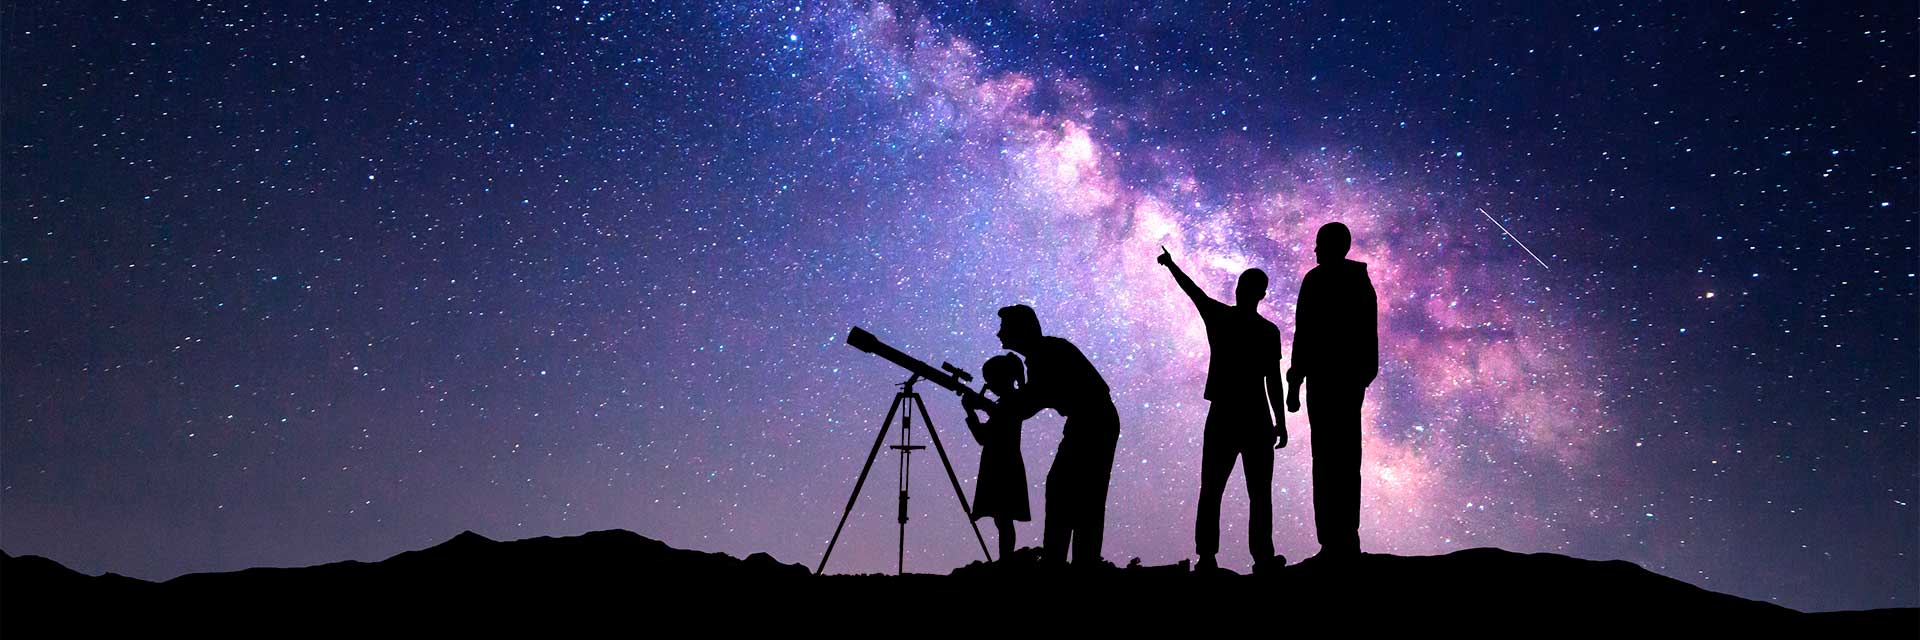 Observación estrellas en Cabo de Gata